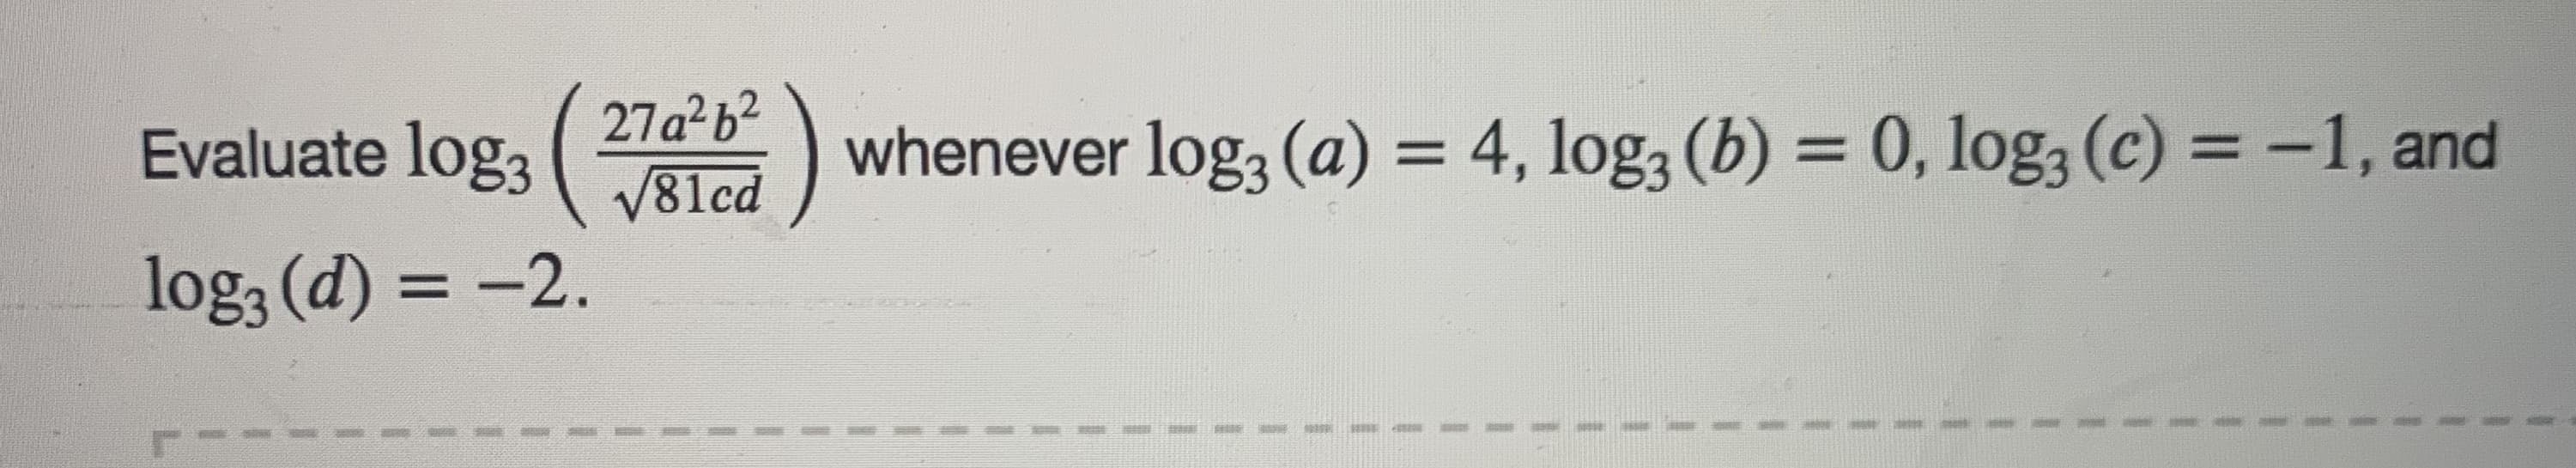 27a b²
Evaluate log, (-
V81cd
whenever log, (a) = 4, log3 (b) = 0, log, (c) = -1, and
%|
log3 (d) = -2.
%3D
